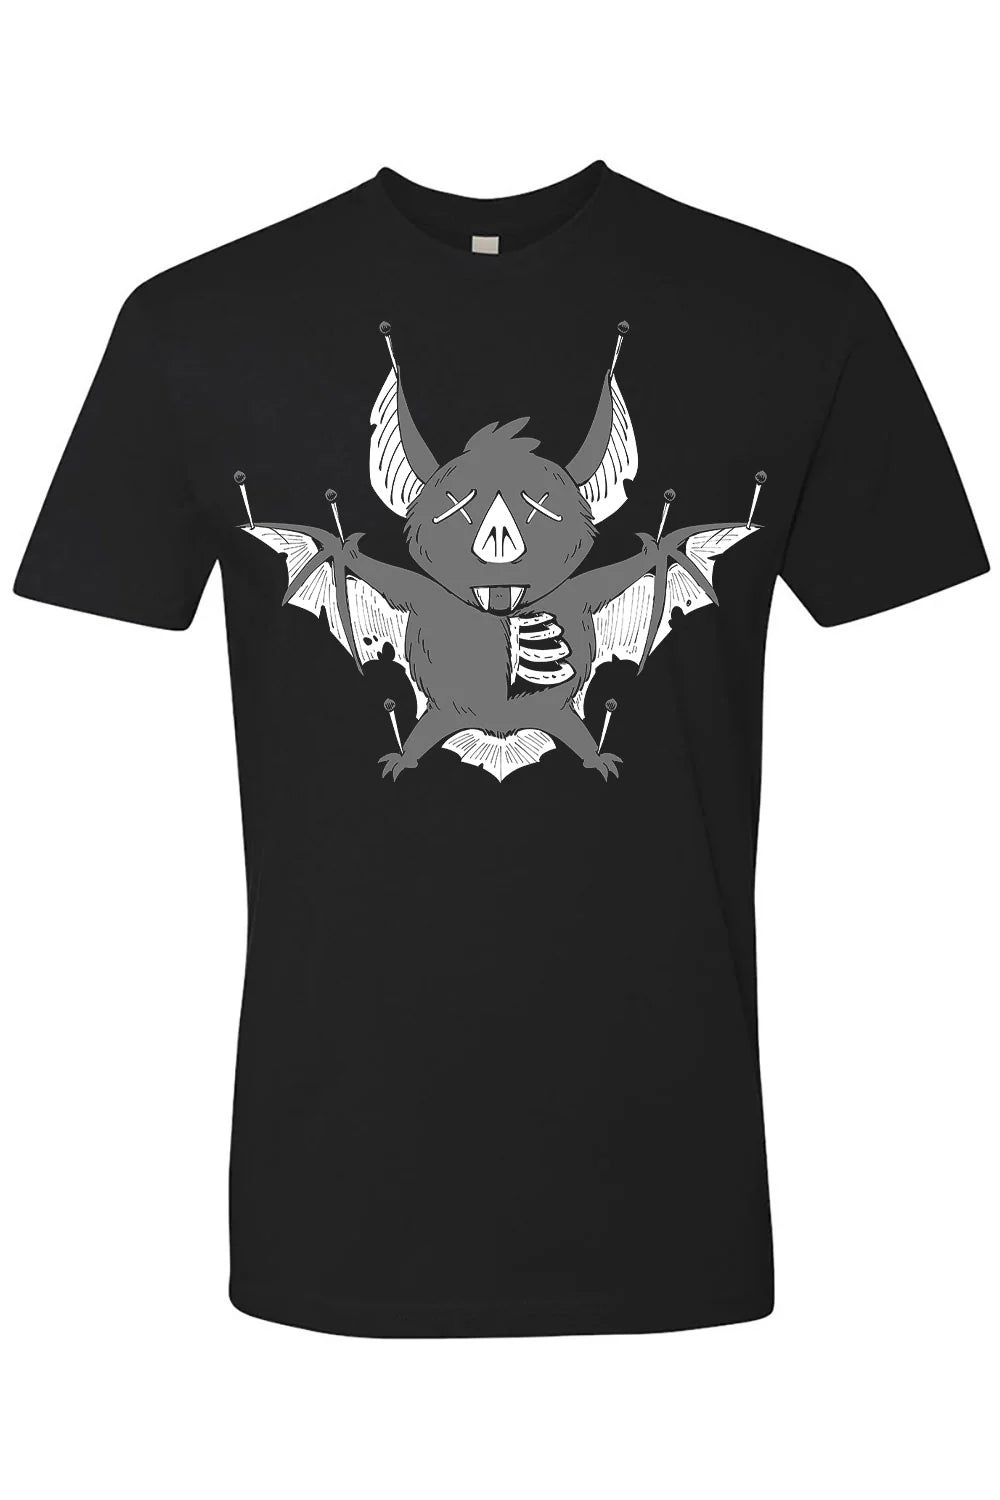 T-Shirt Taxidermy Bat